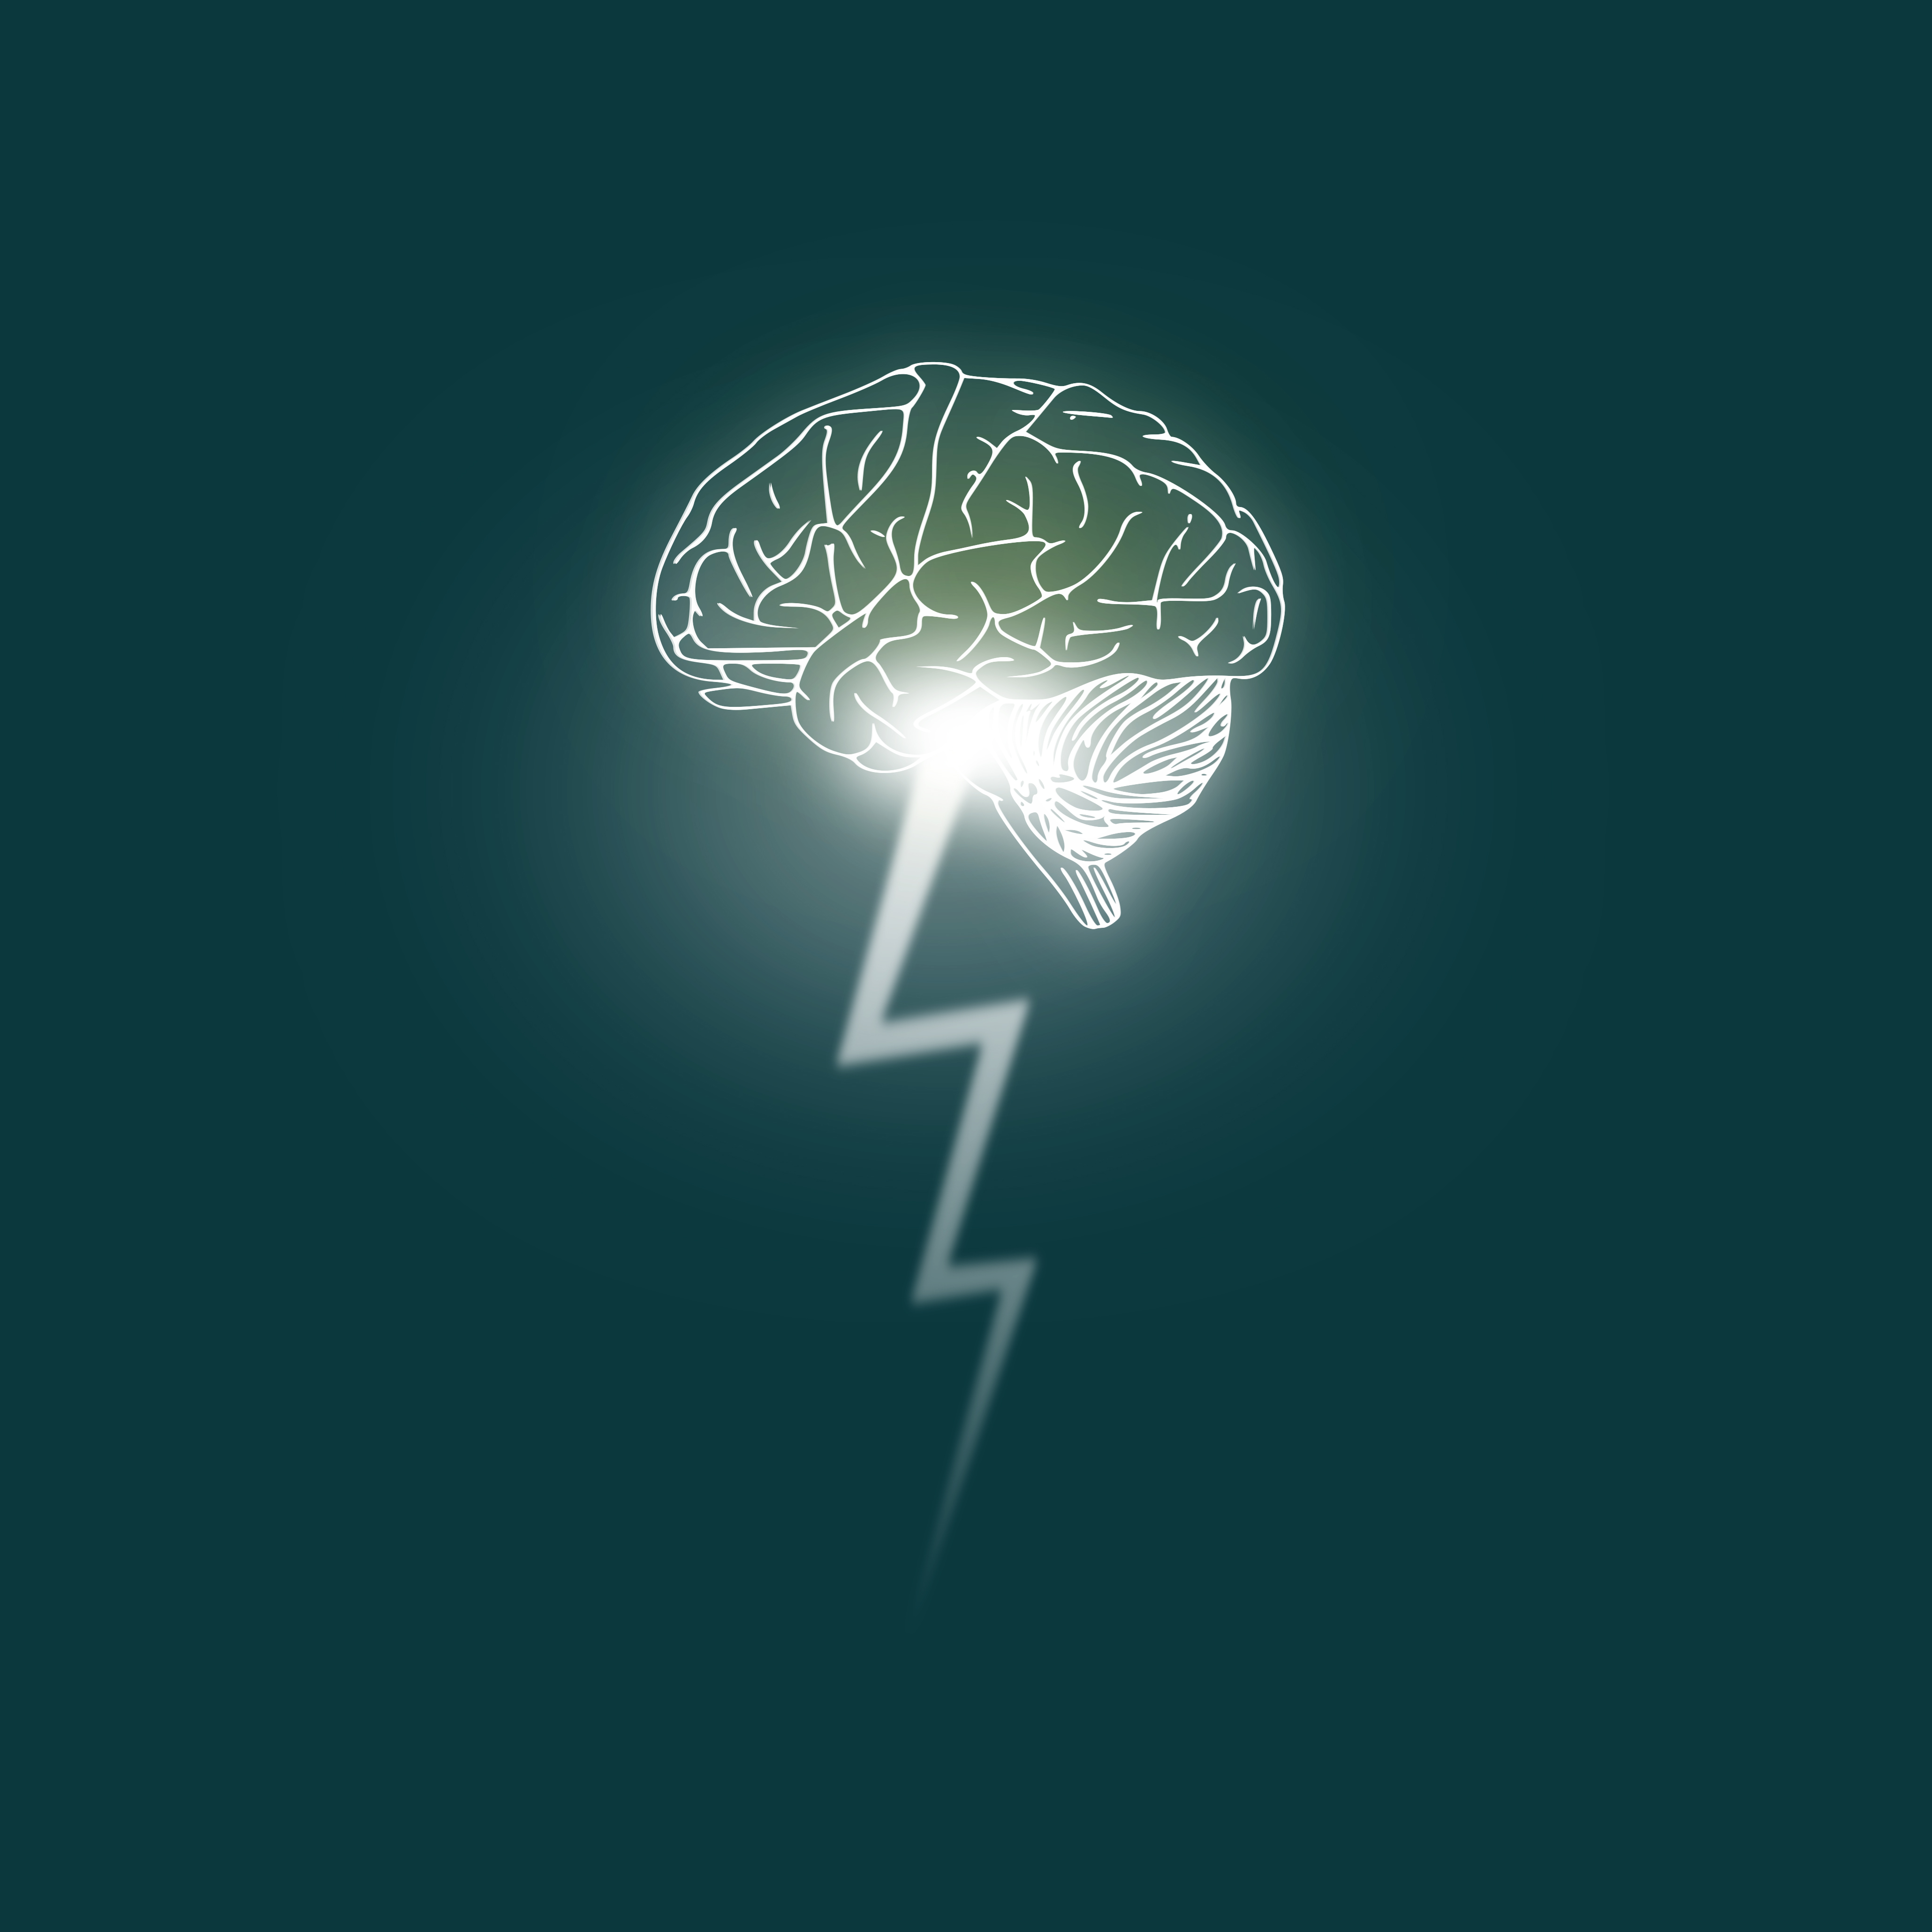 Brainstorming - brain unleashes a lightning bolt photo